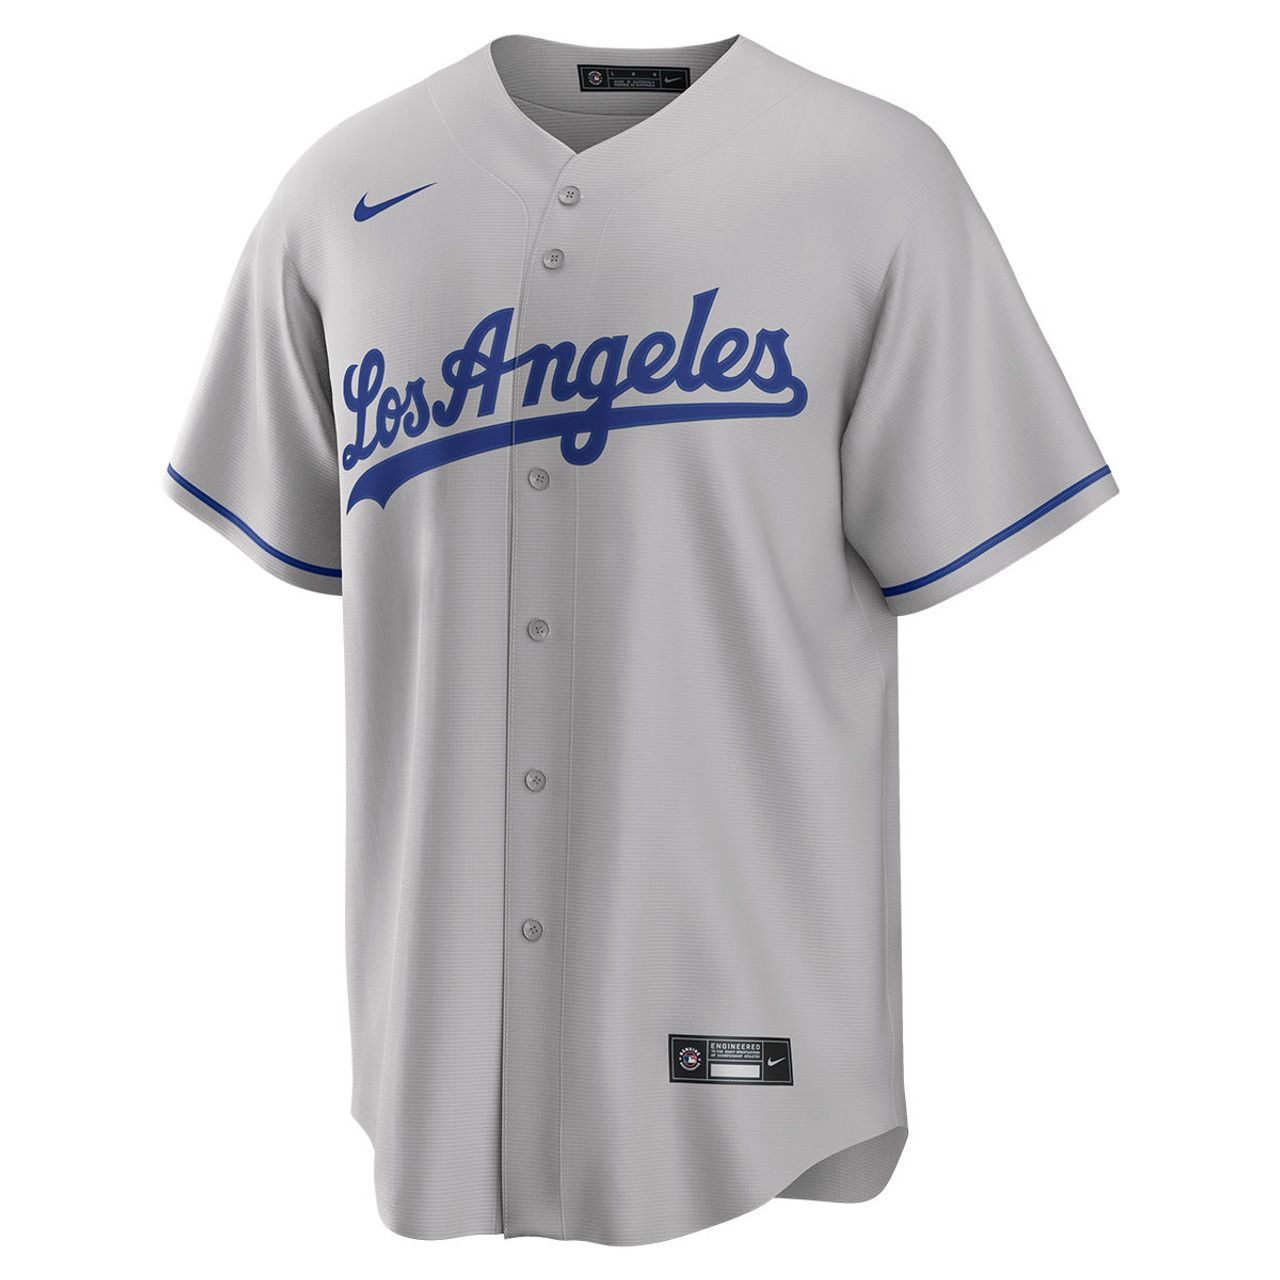 Mookie Betts - Cheap MLB Baseball Jerseys